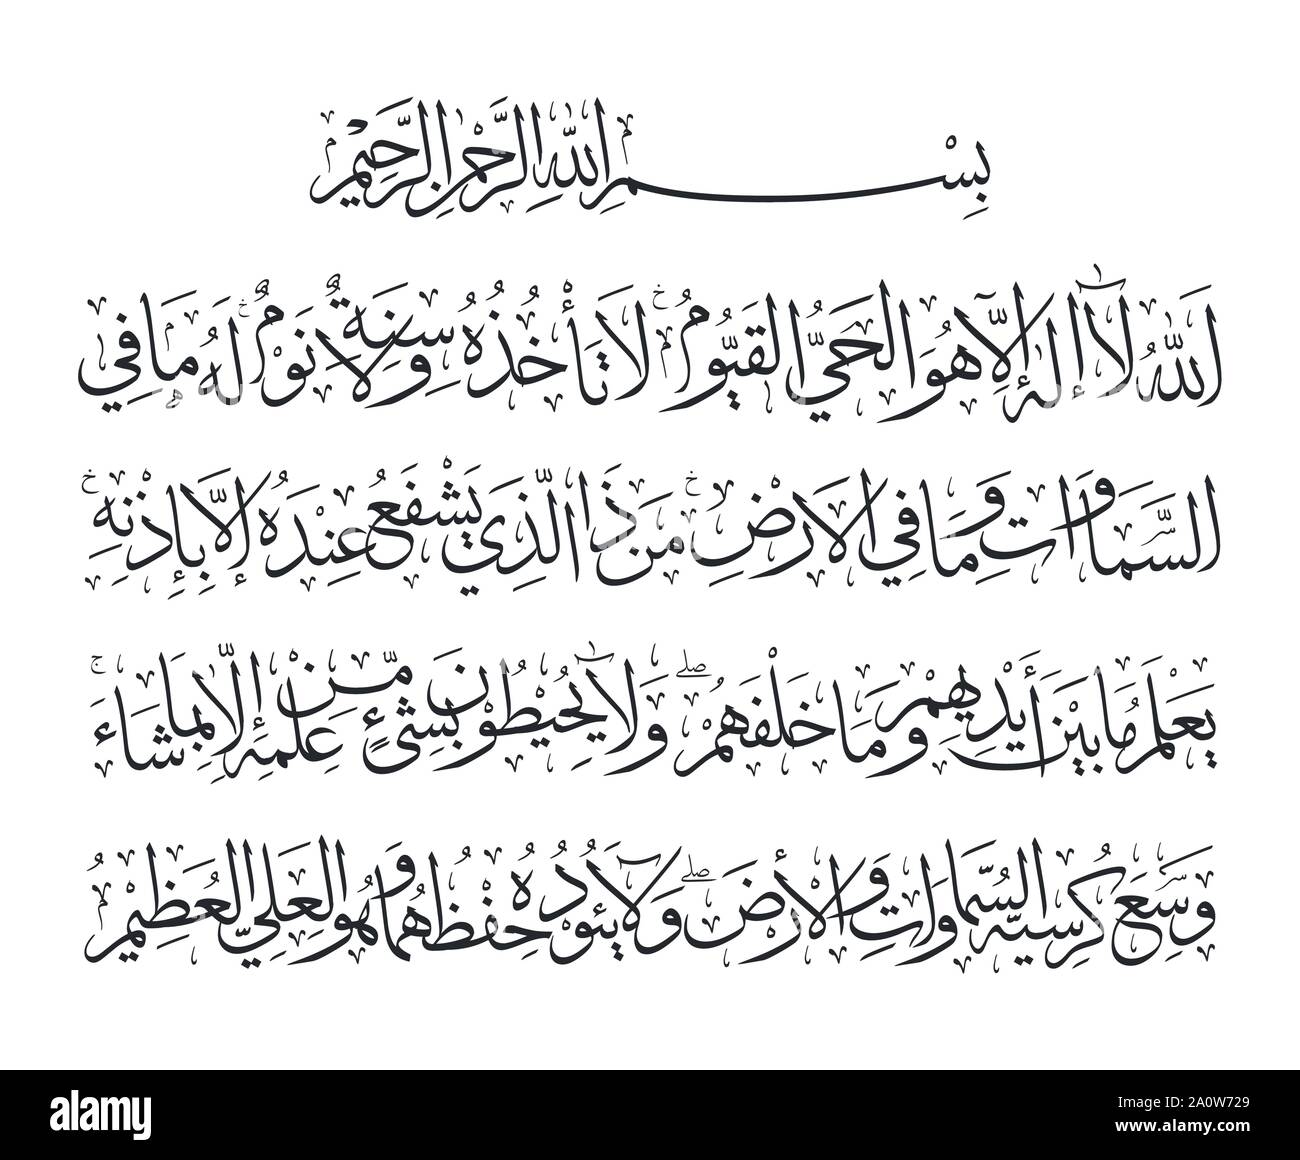 surah baqarah full text